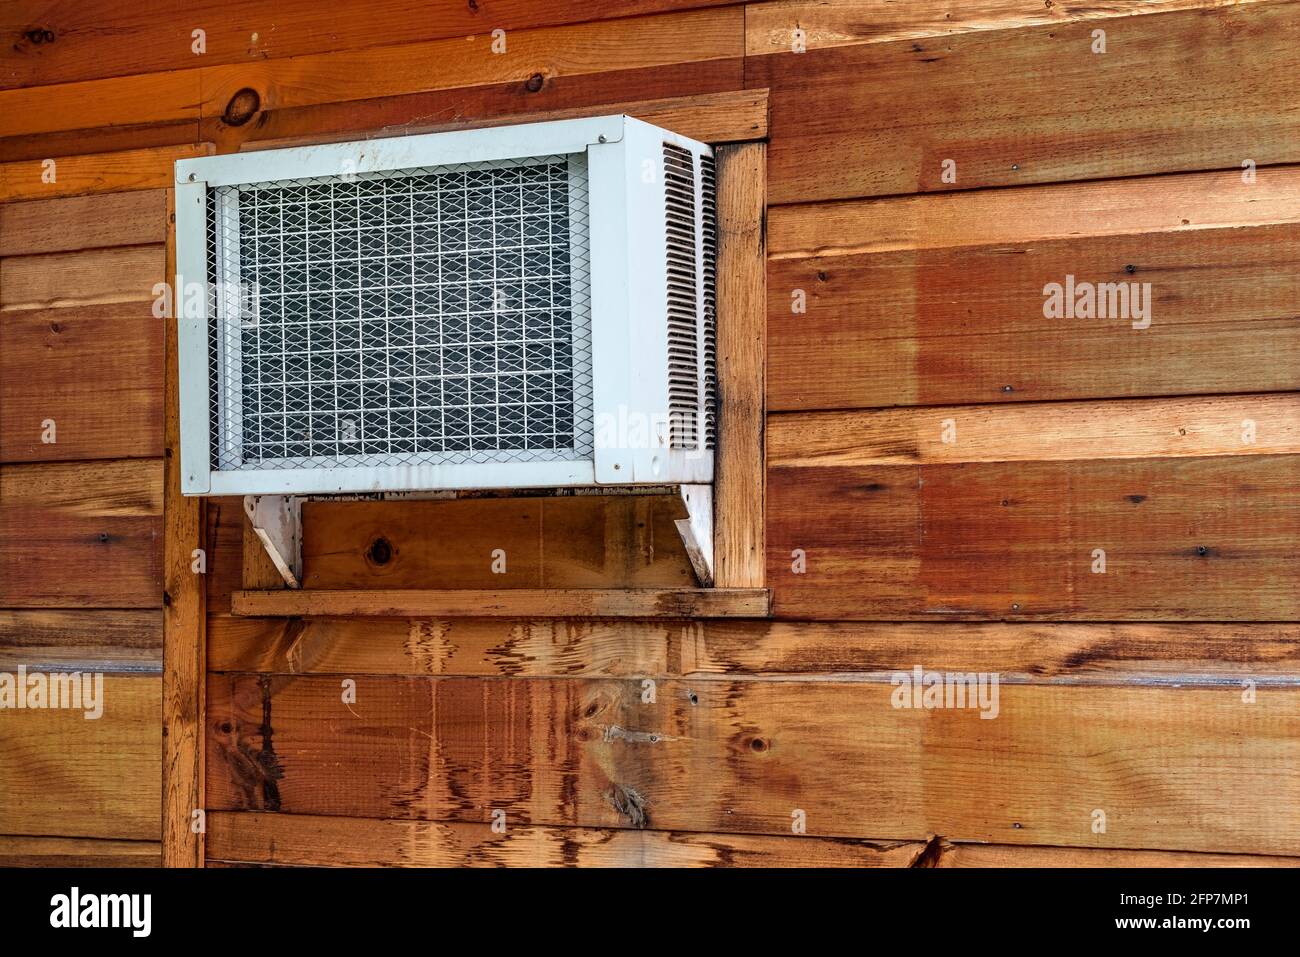 Aire acondicionado de ventana fotografías e imágenes de alta resolución -  Alamy